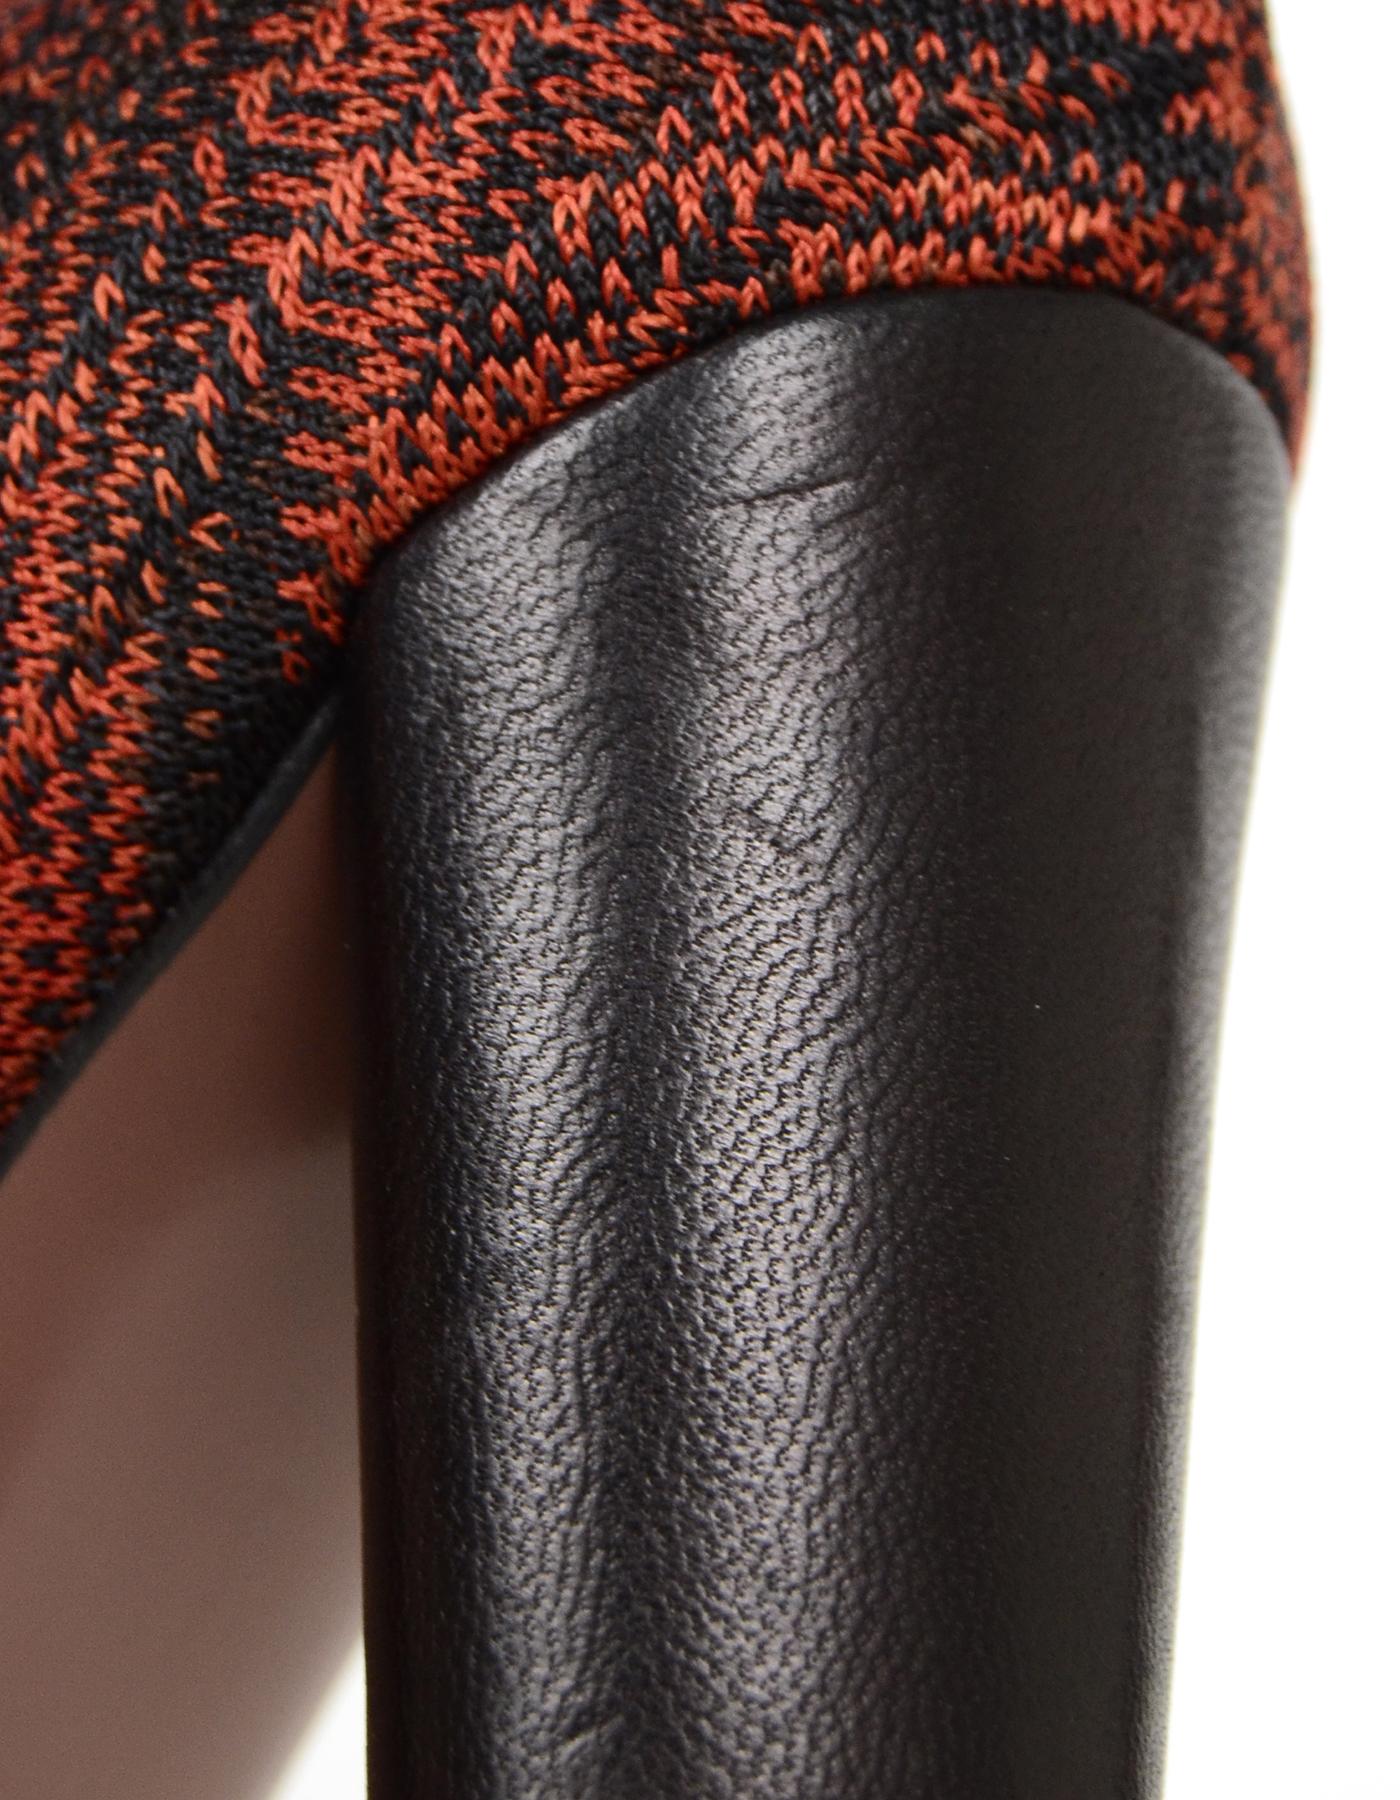 Missoni Orange/Black Knit/Leather Cap Toe Heels sz 39 3